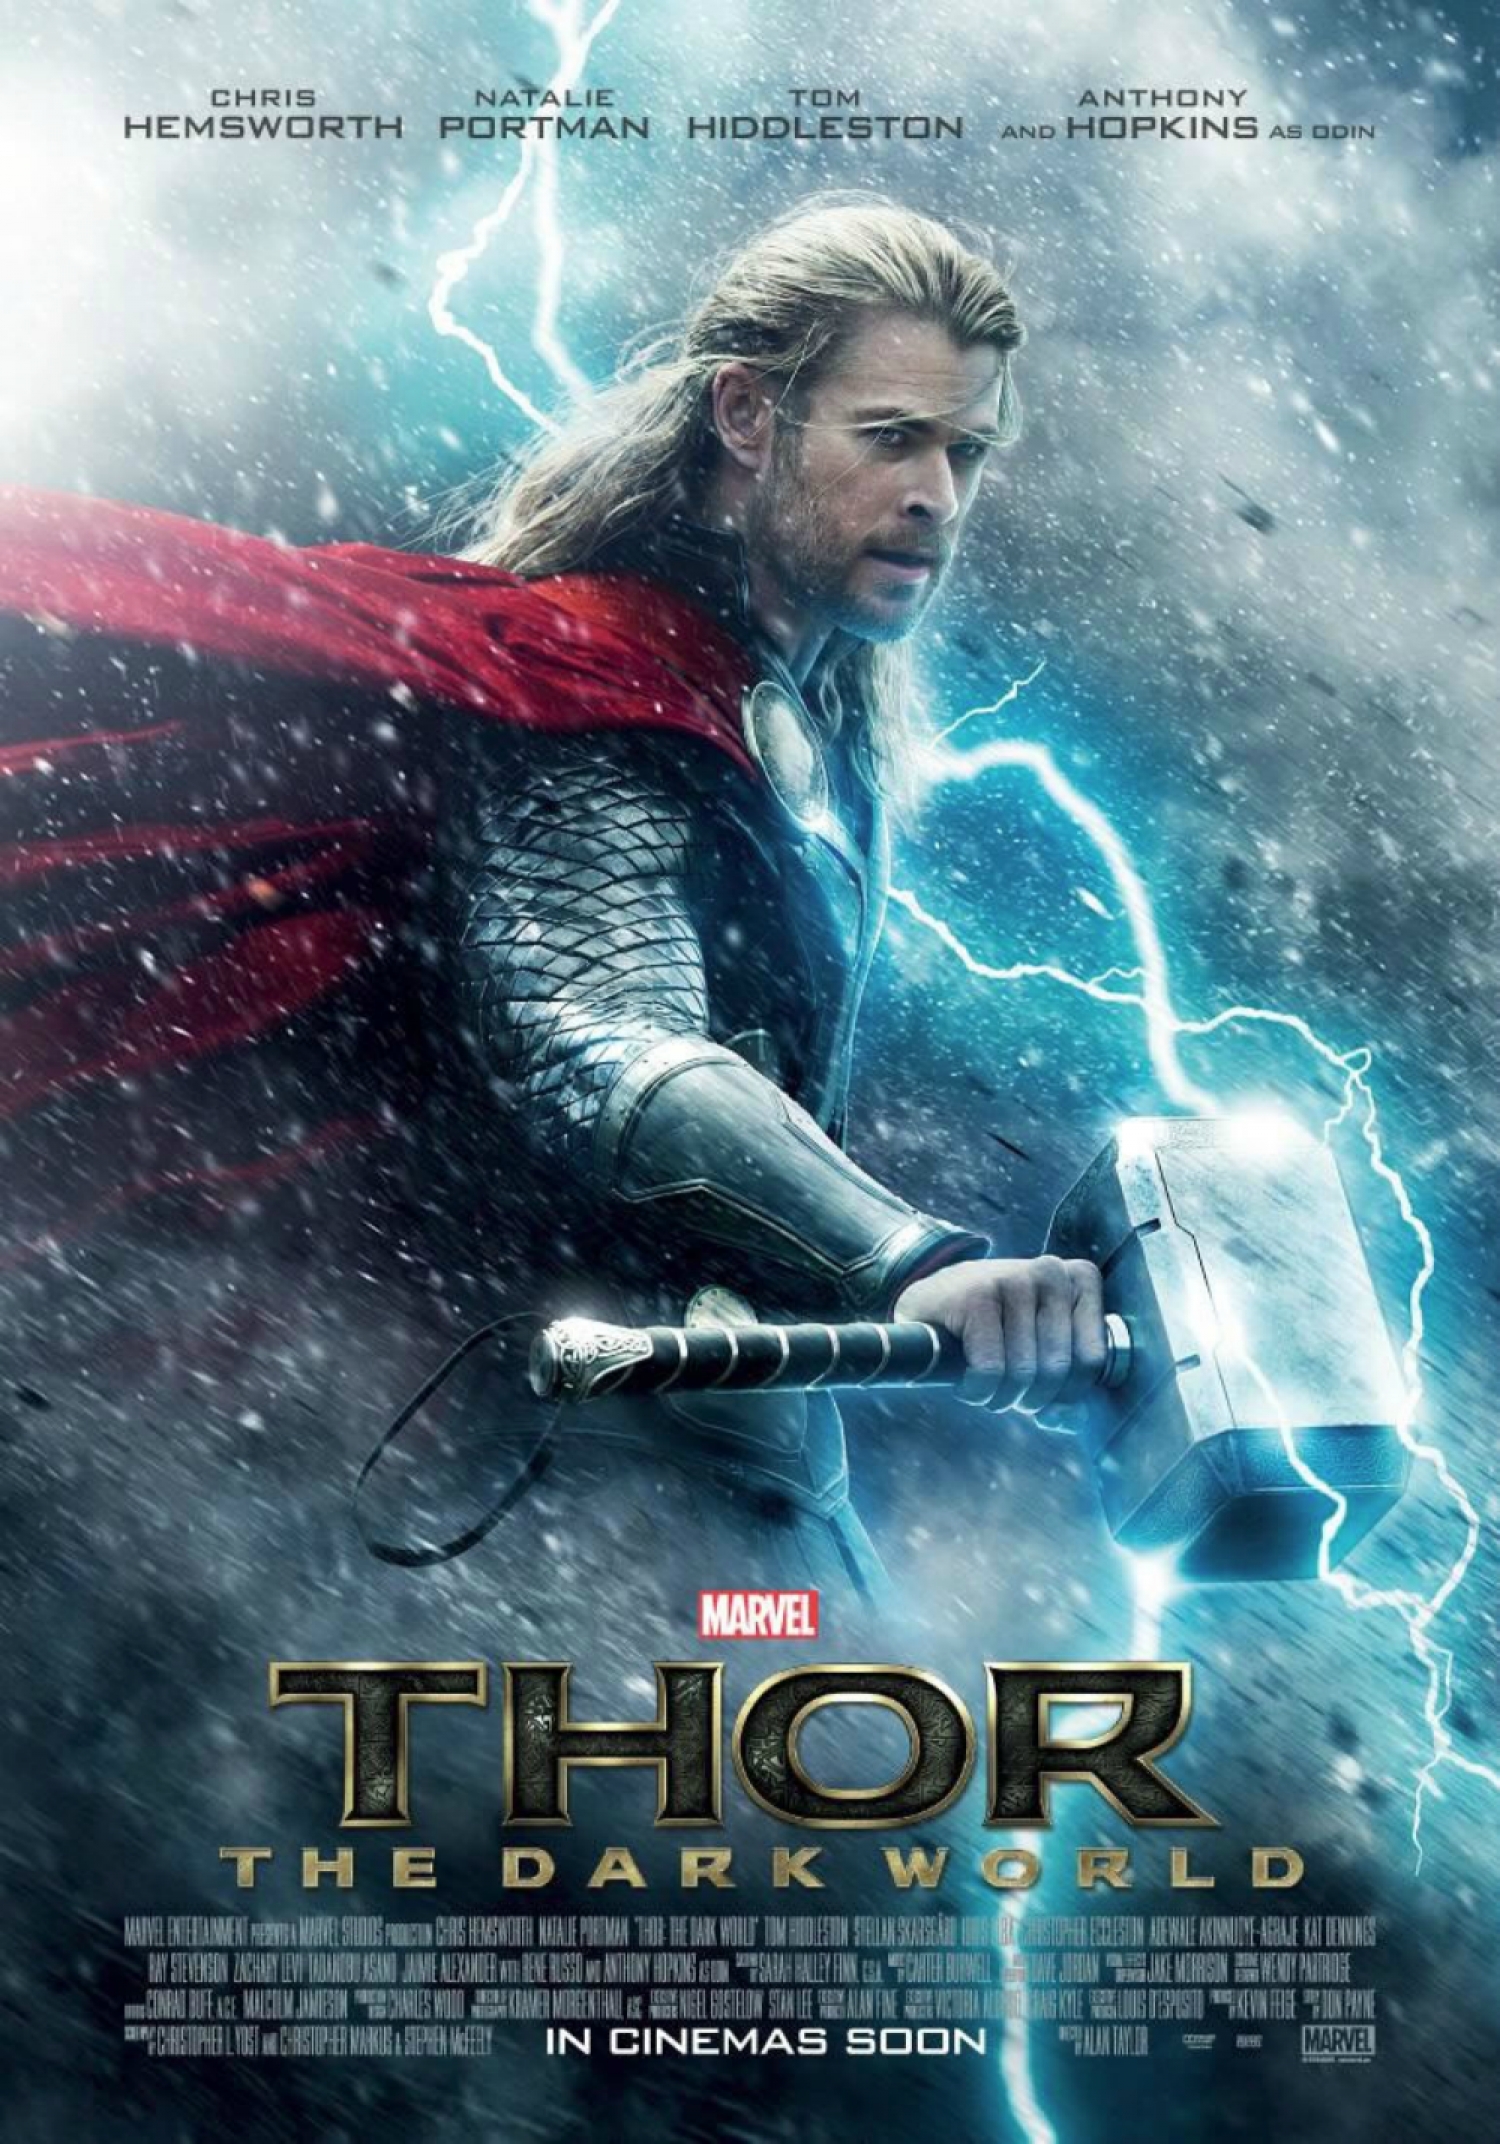 Thor 2 The Dark World ธอร์ 2 เทพเจ้าสายฟ้าโลกาทมิฬ